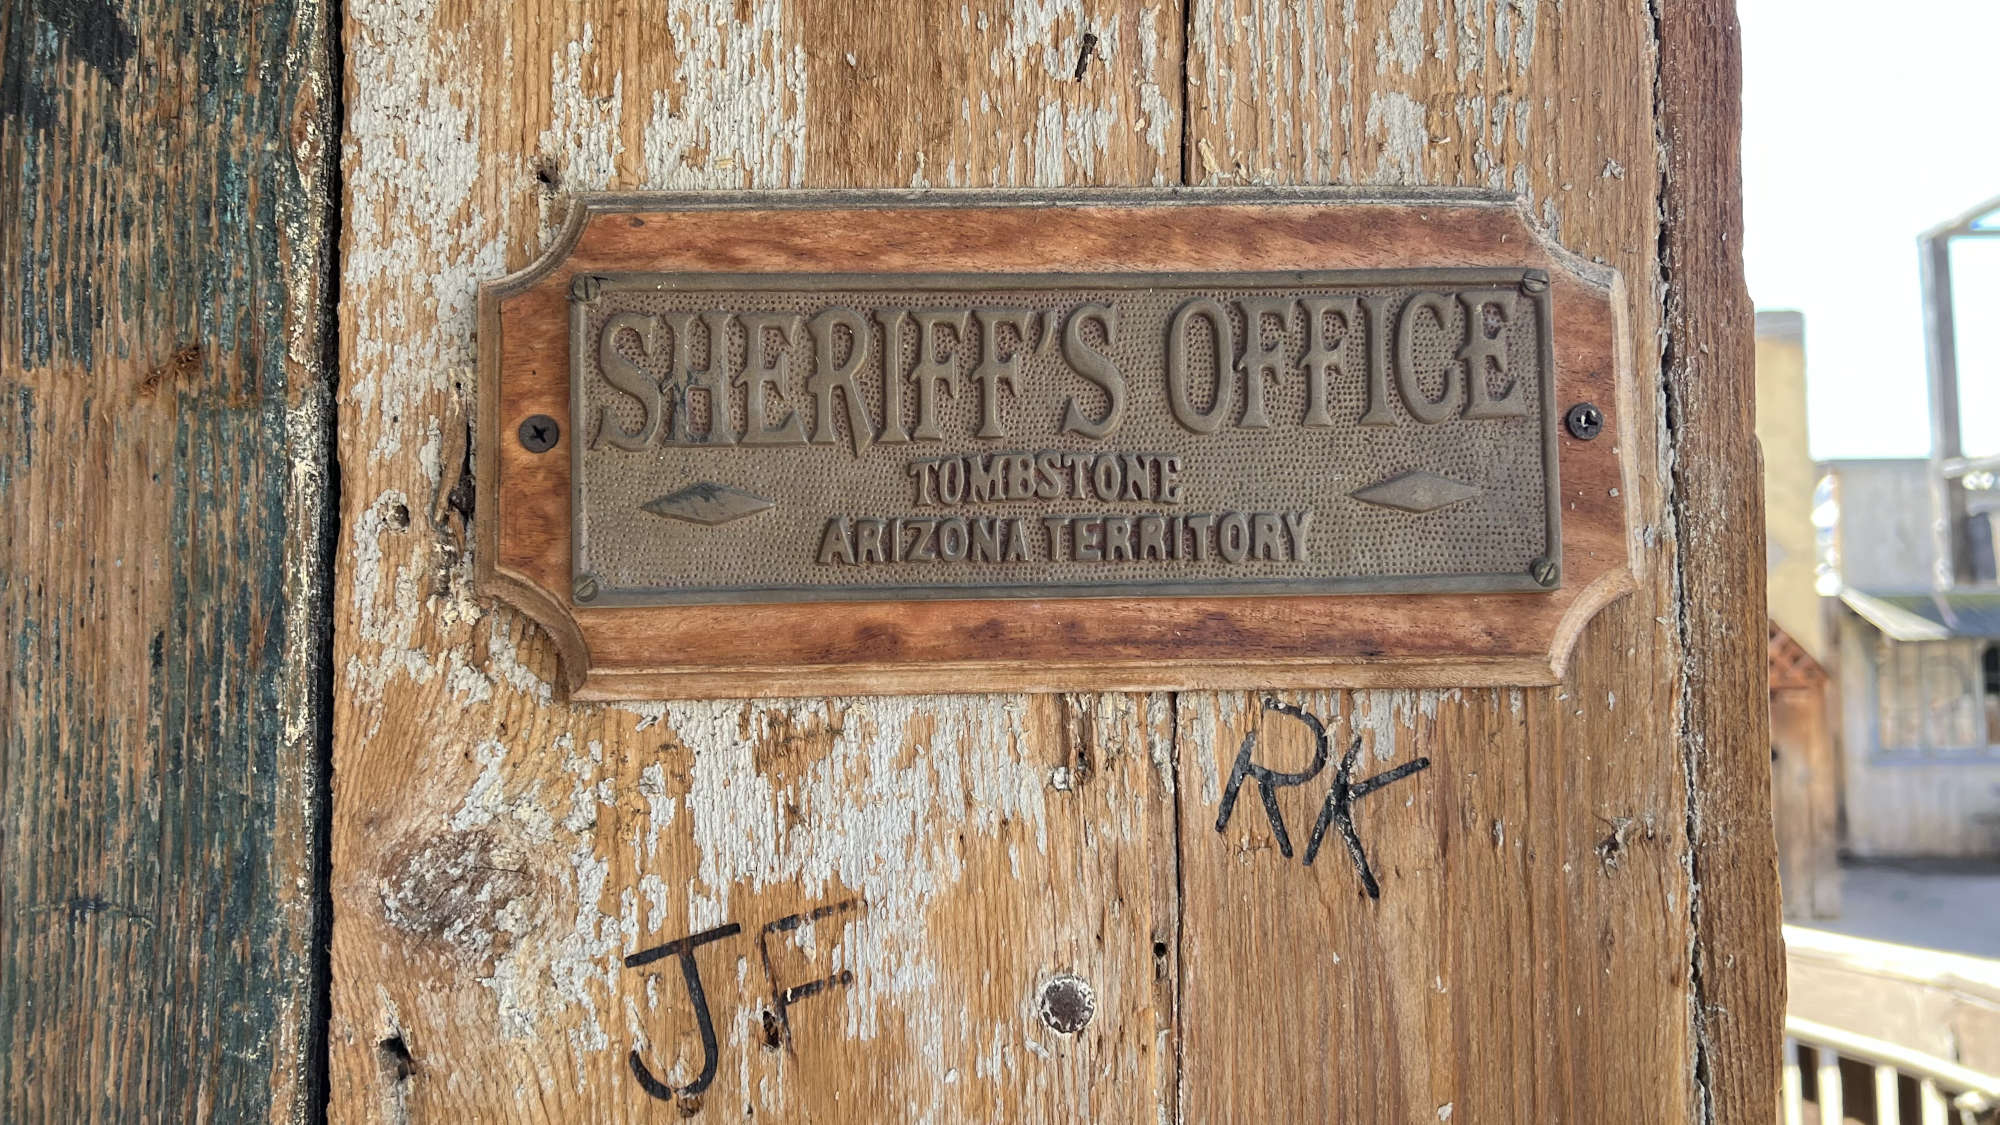 Sheriff's Office Tombstone Arizona Territory